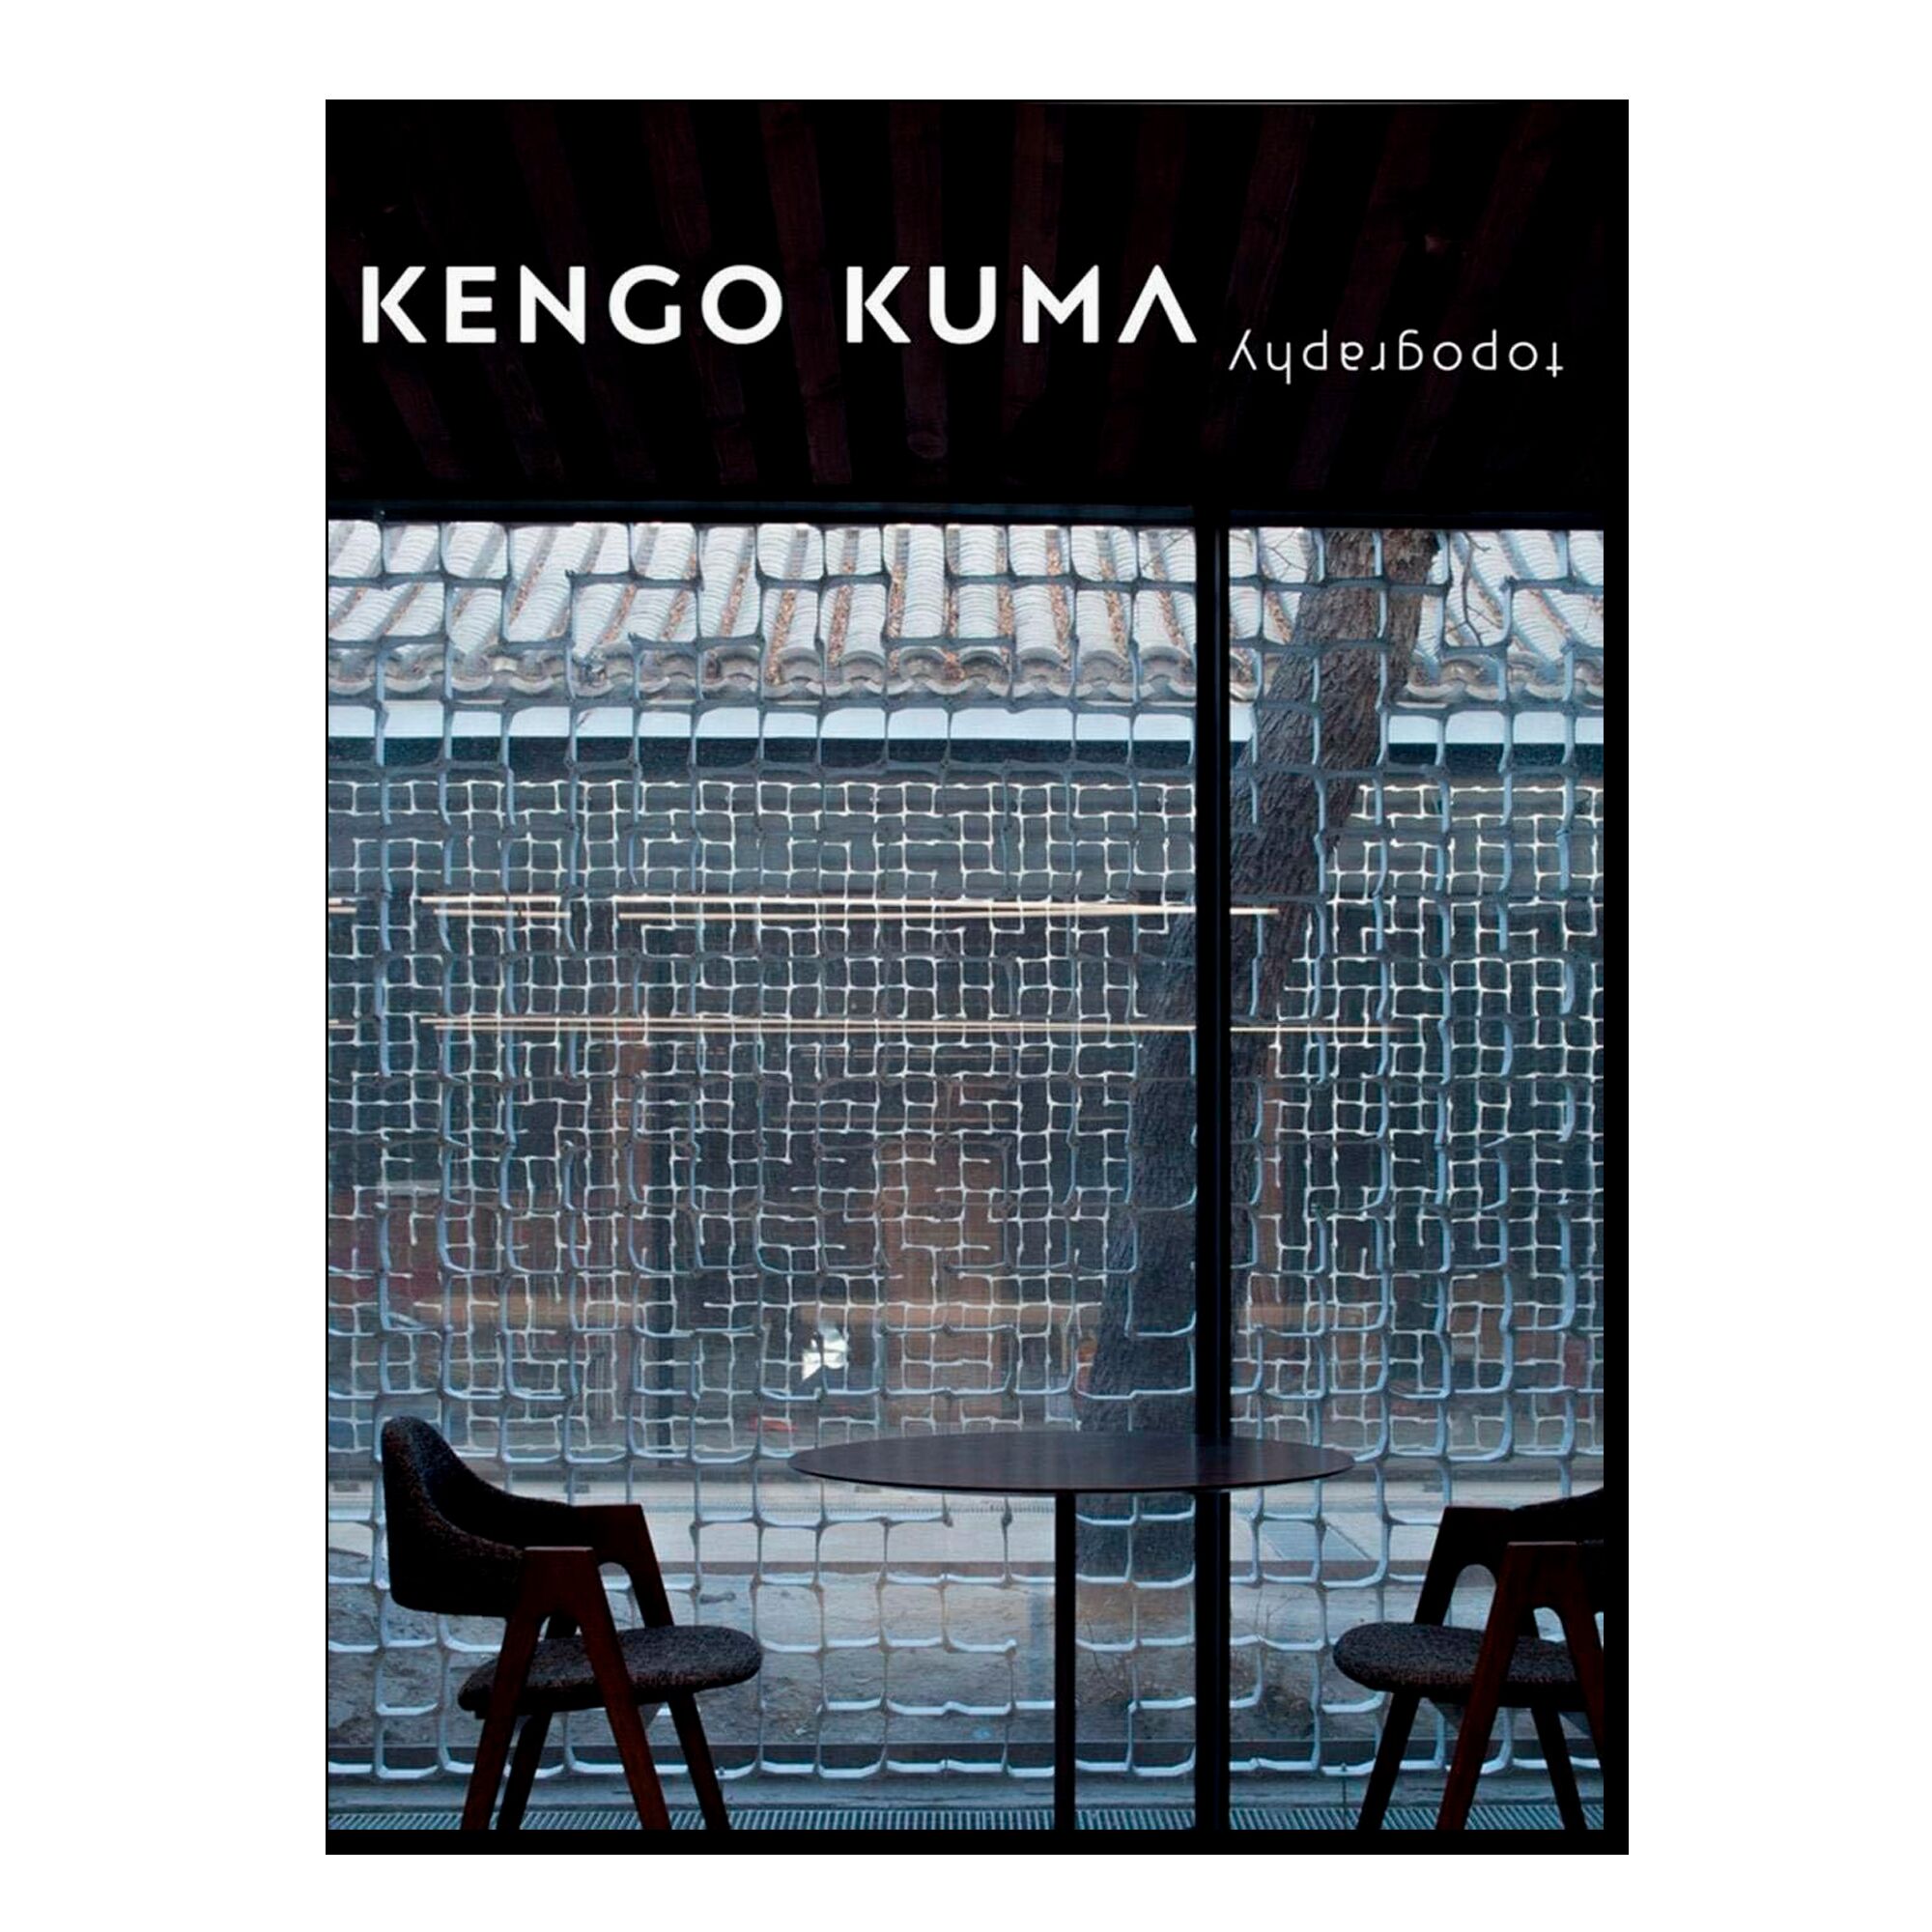 Kengo Kuma: Topography